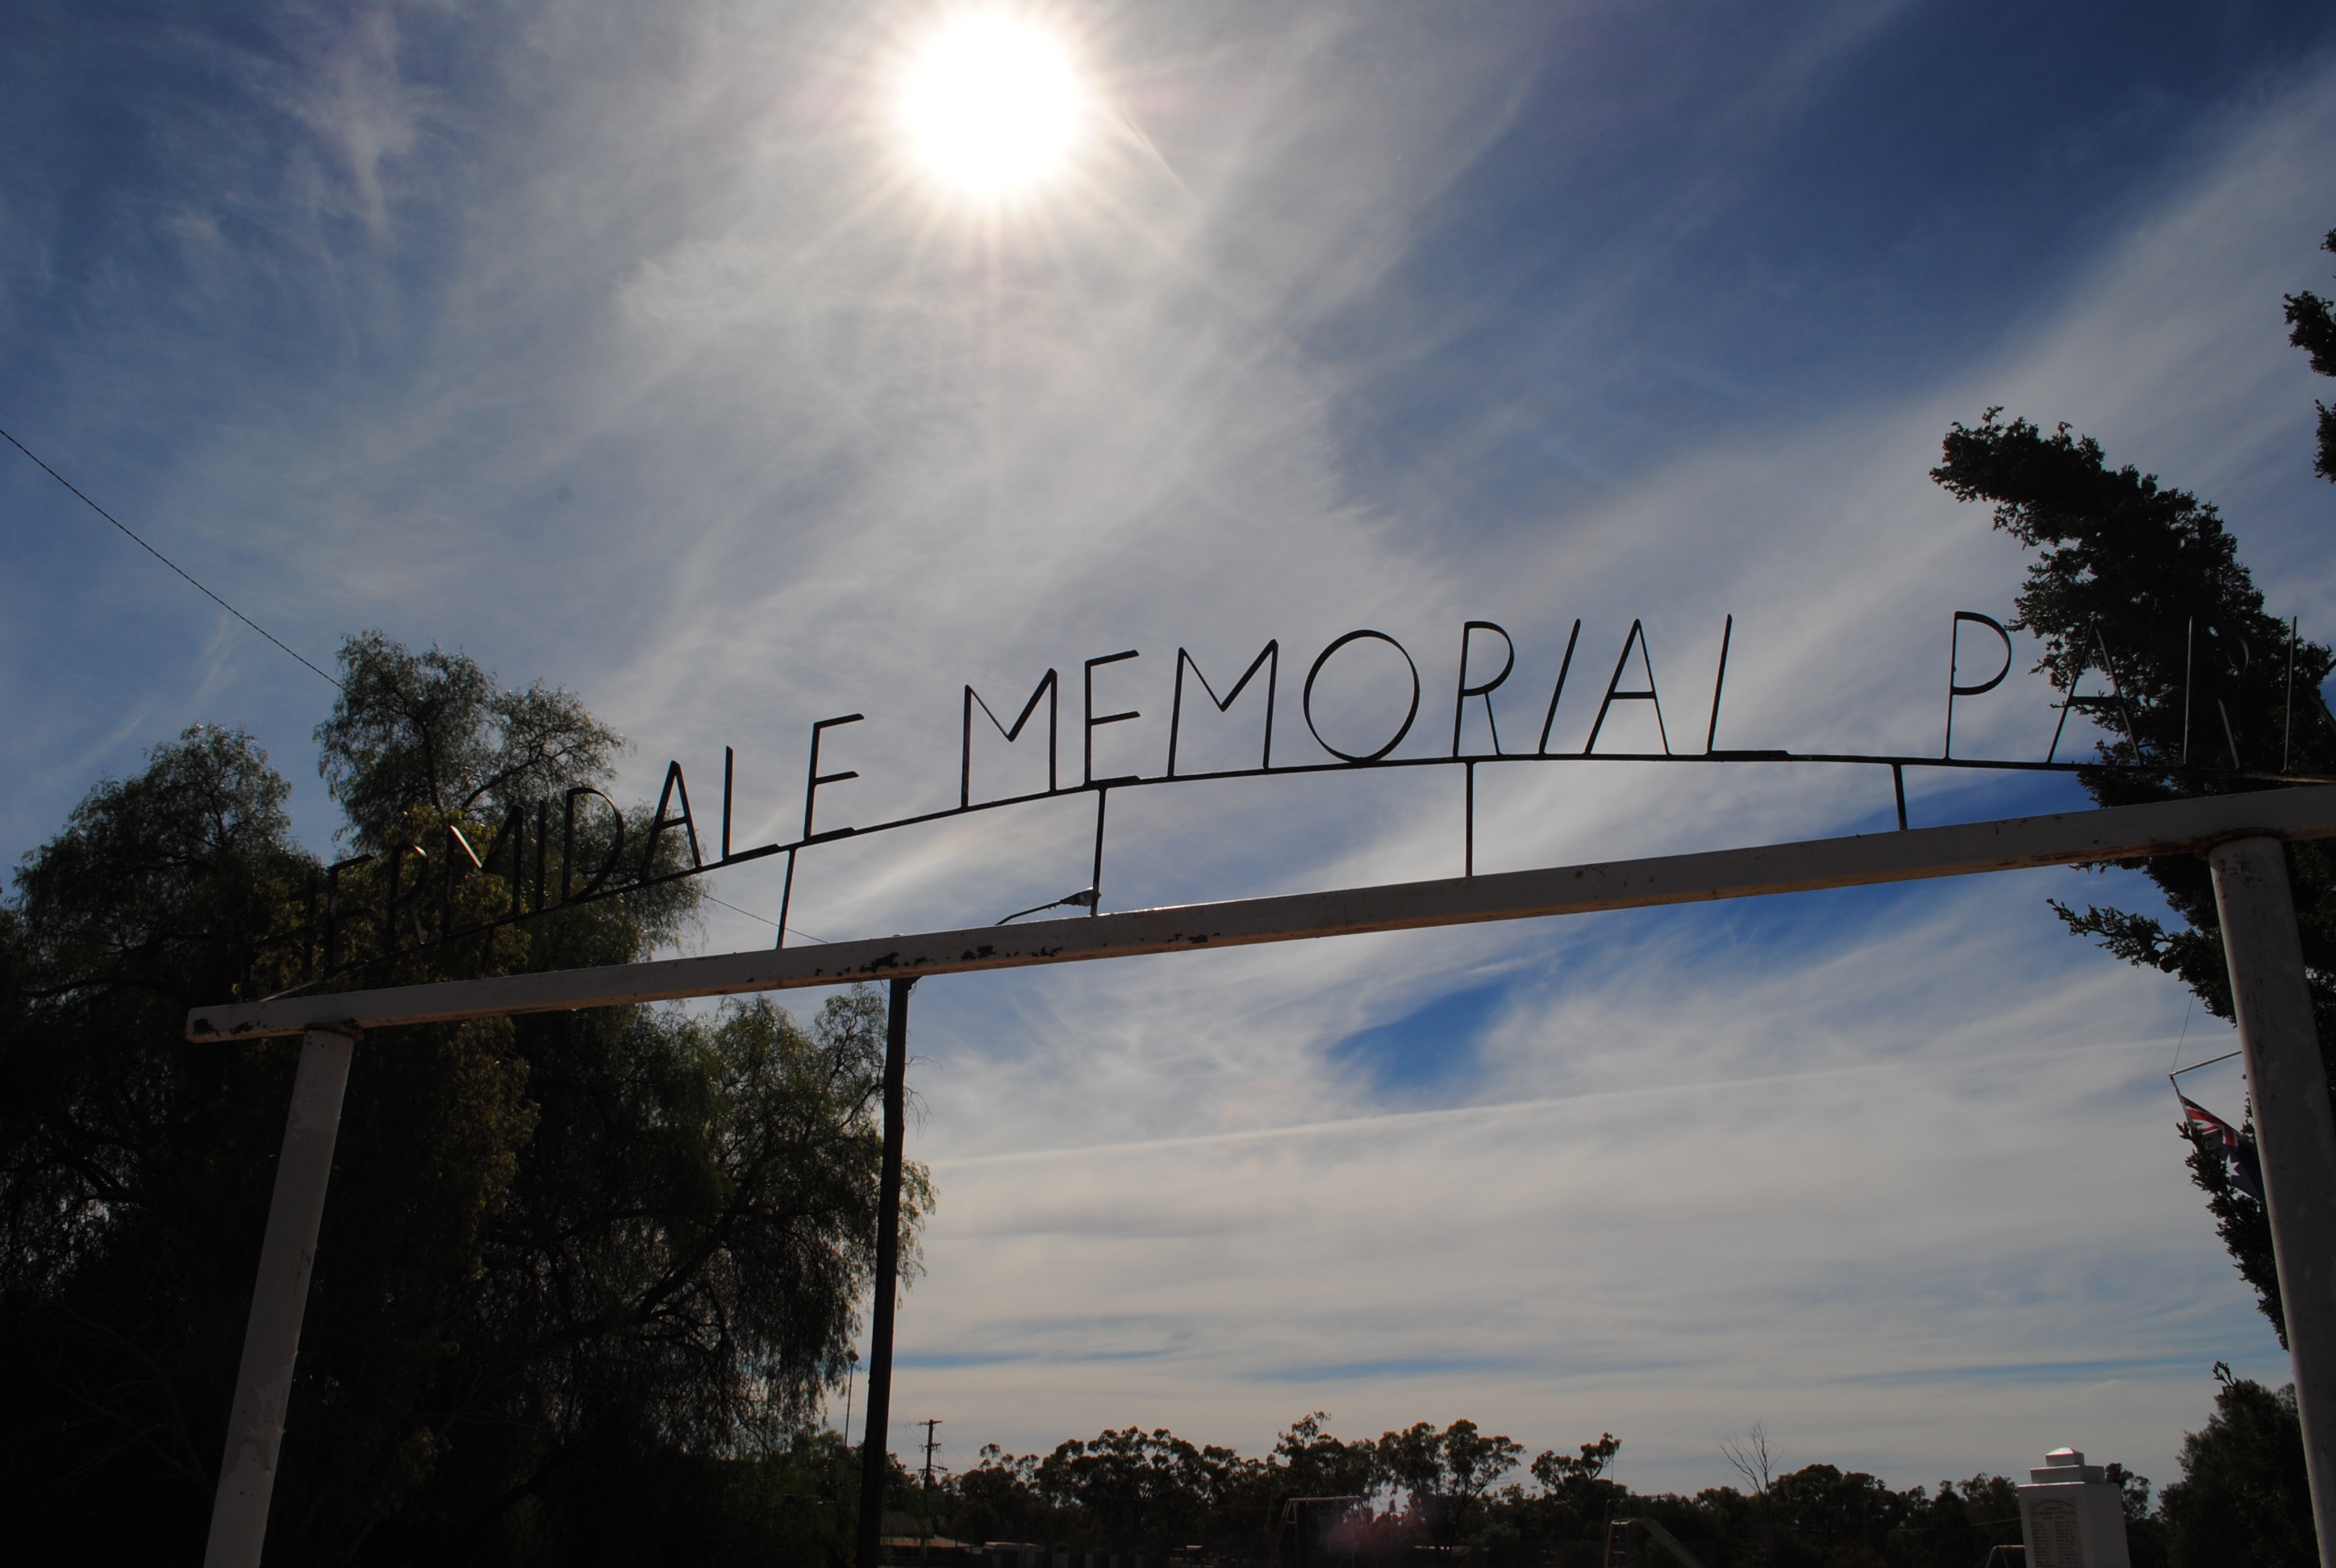 Memorial Park Hermidale